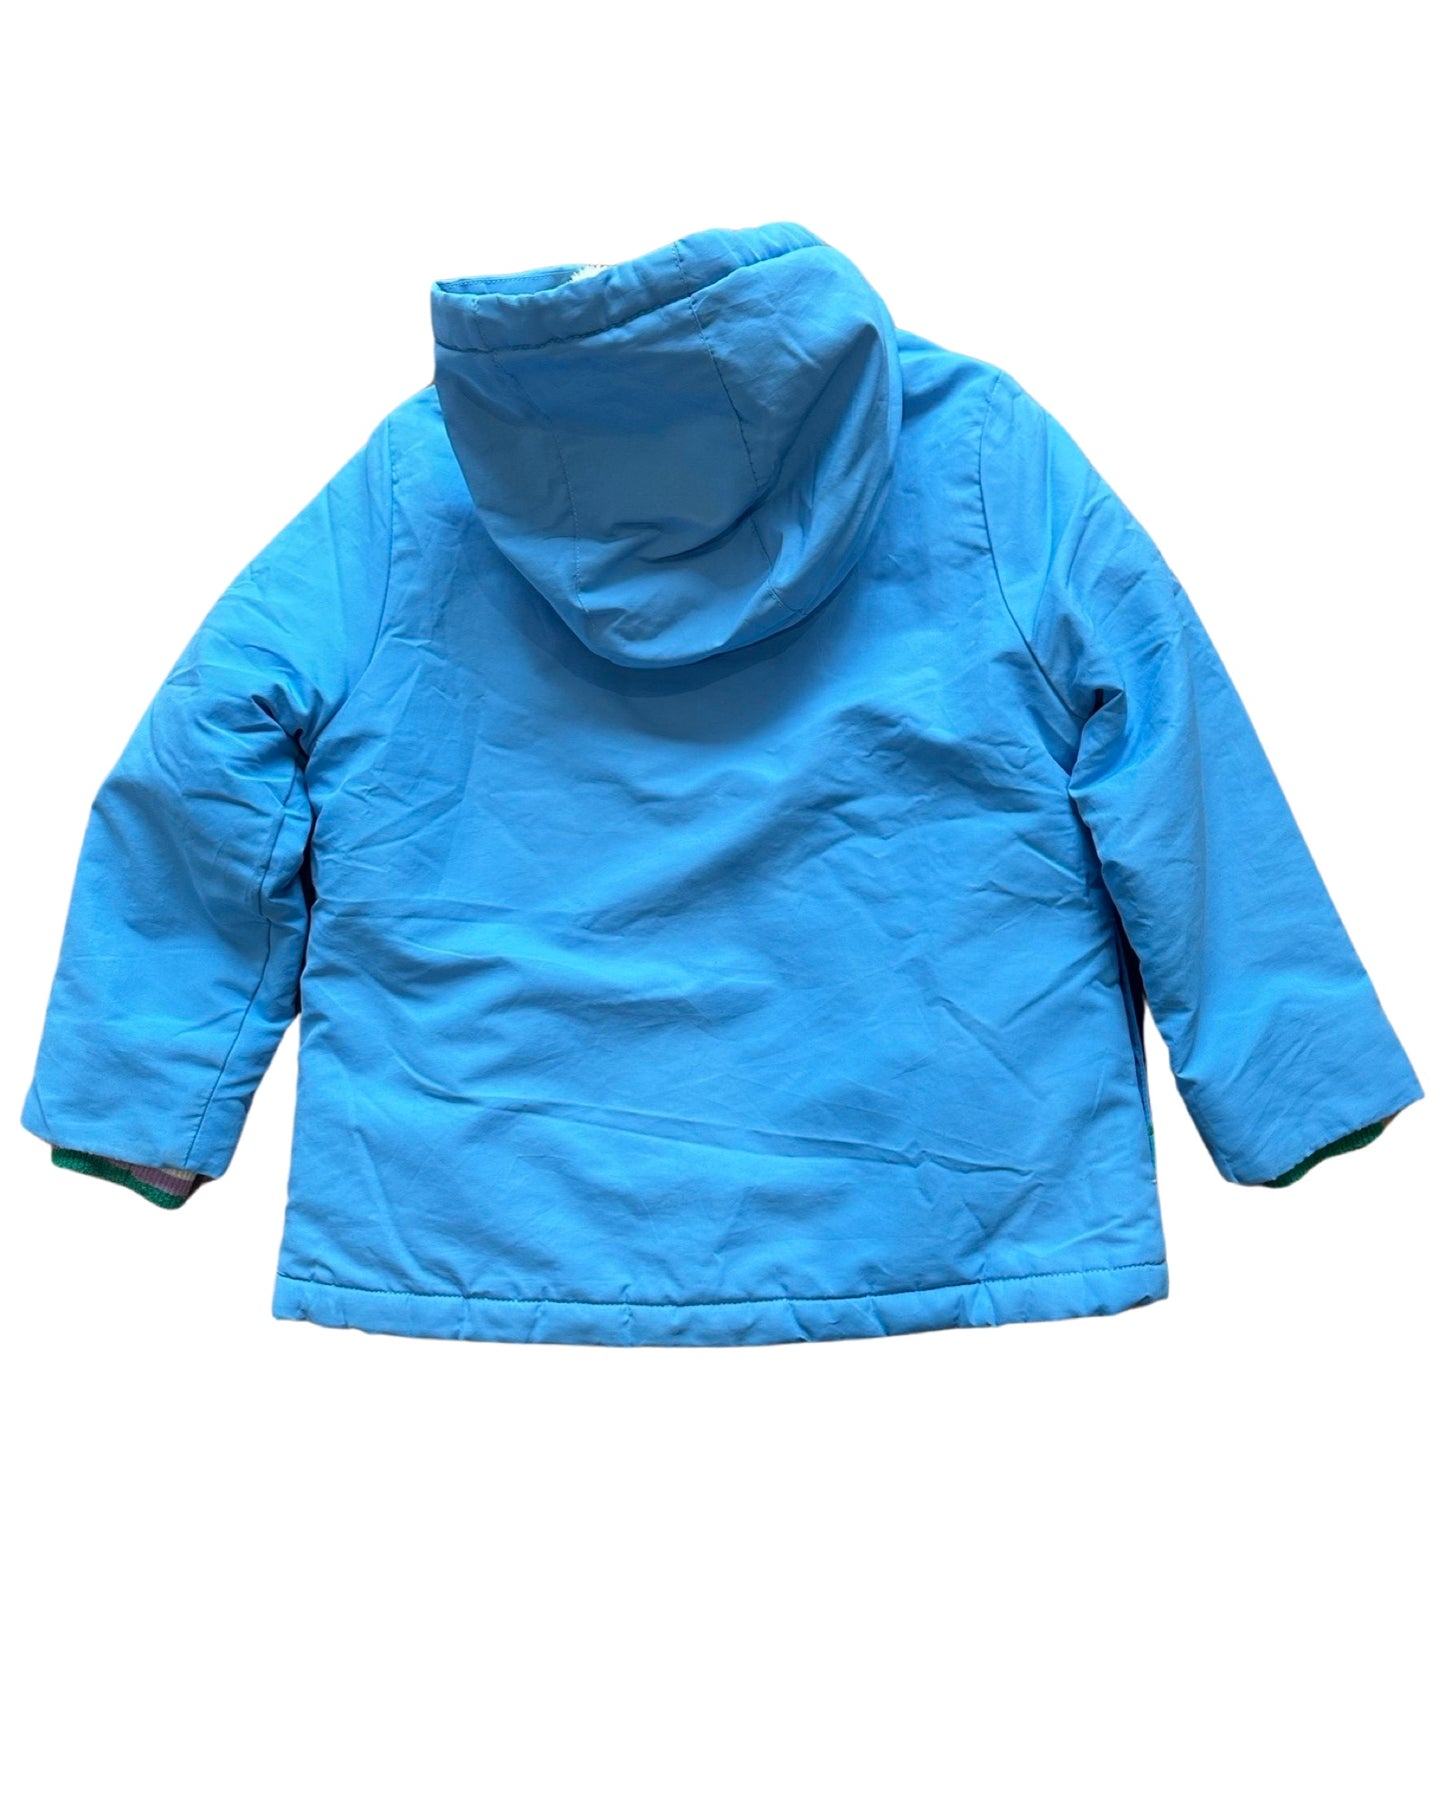 Boden kids rainbow light blue jacket (5-6yrs)